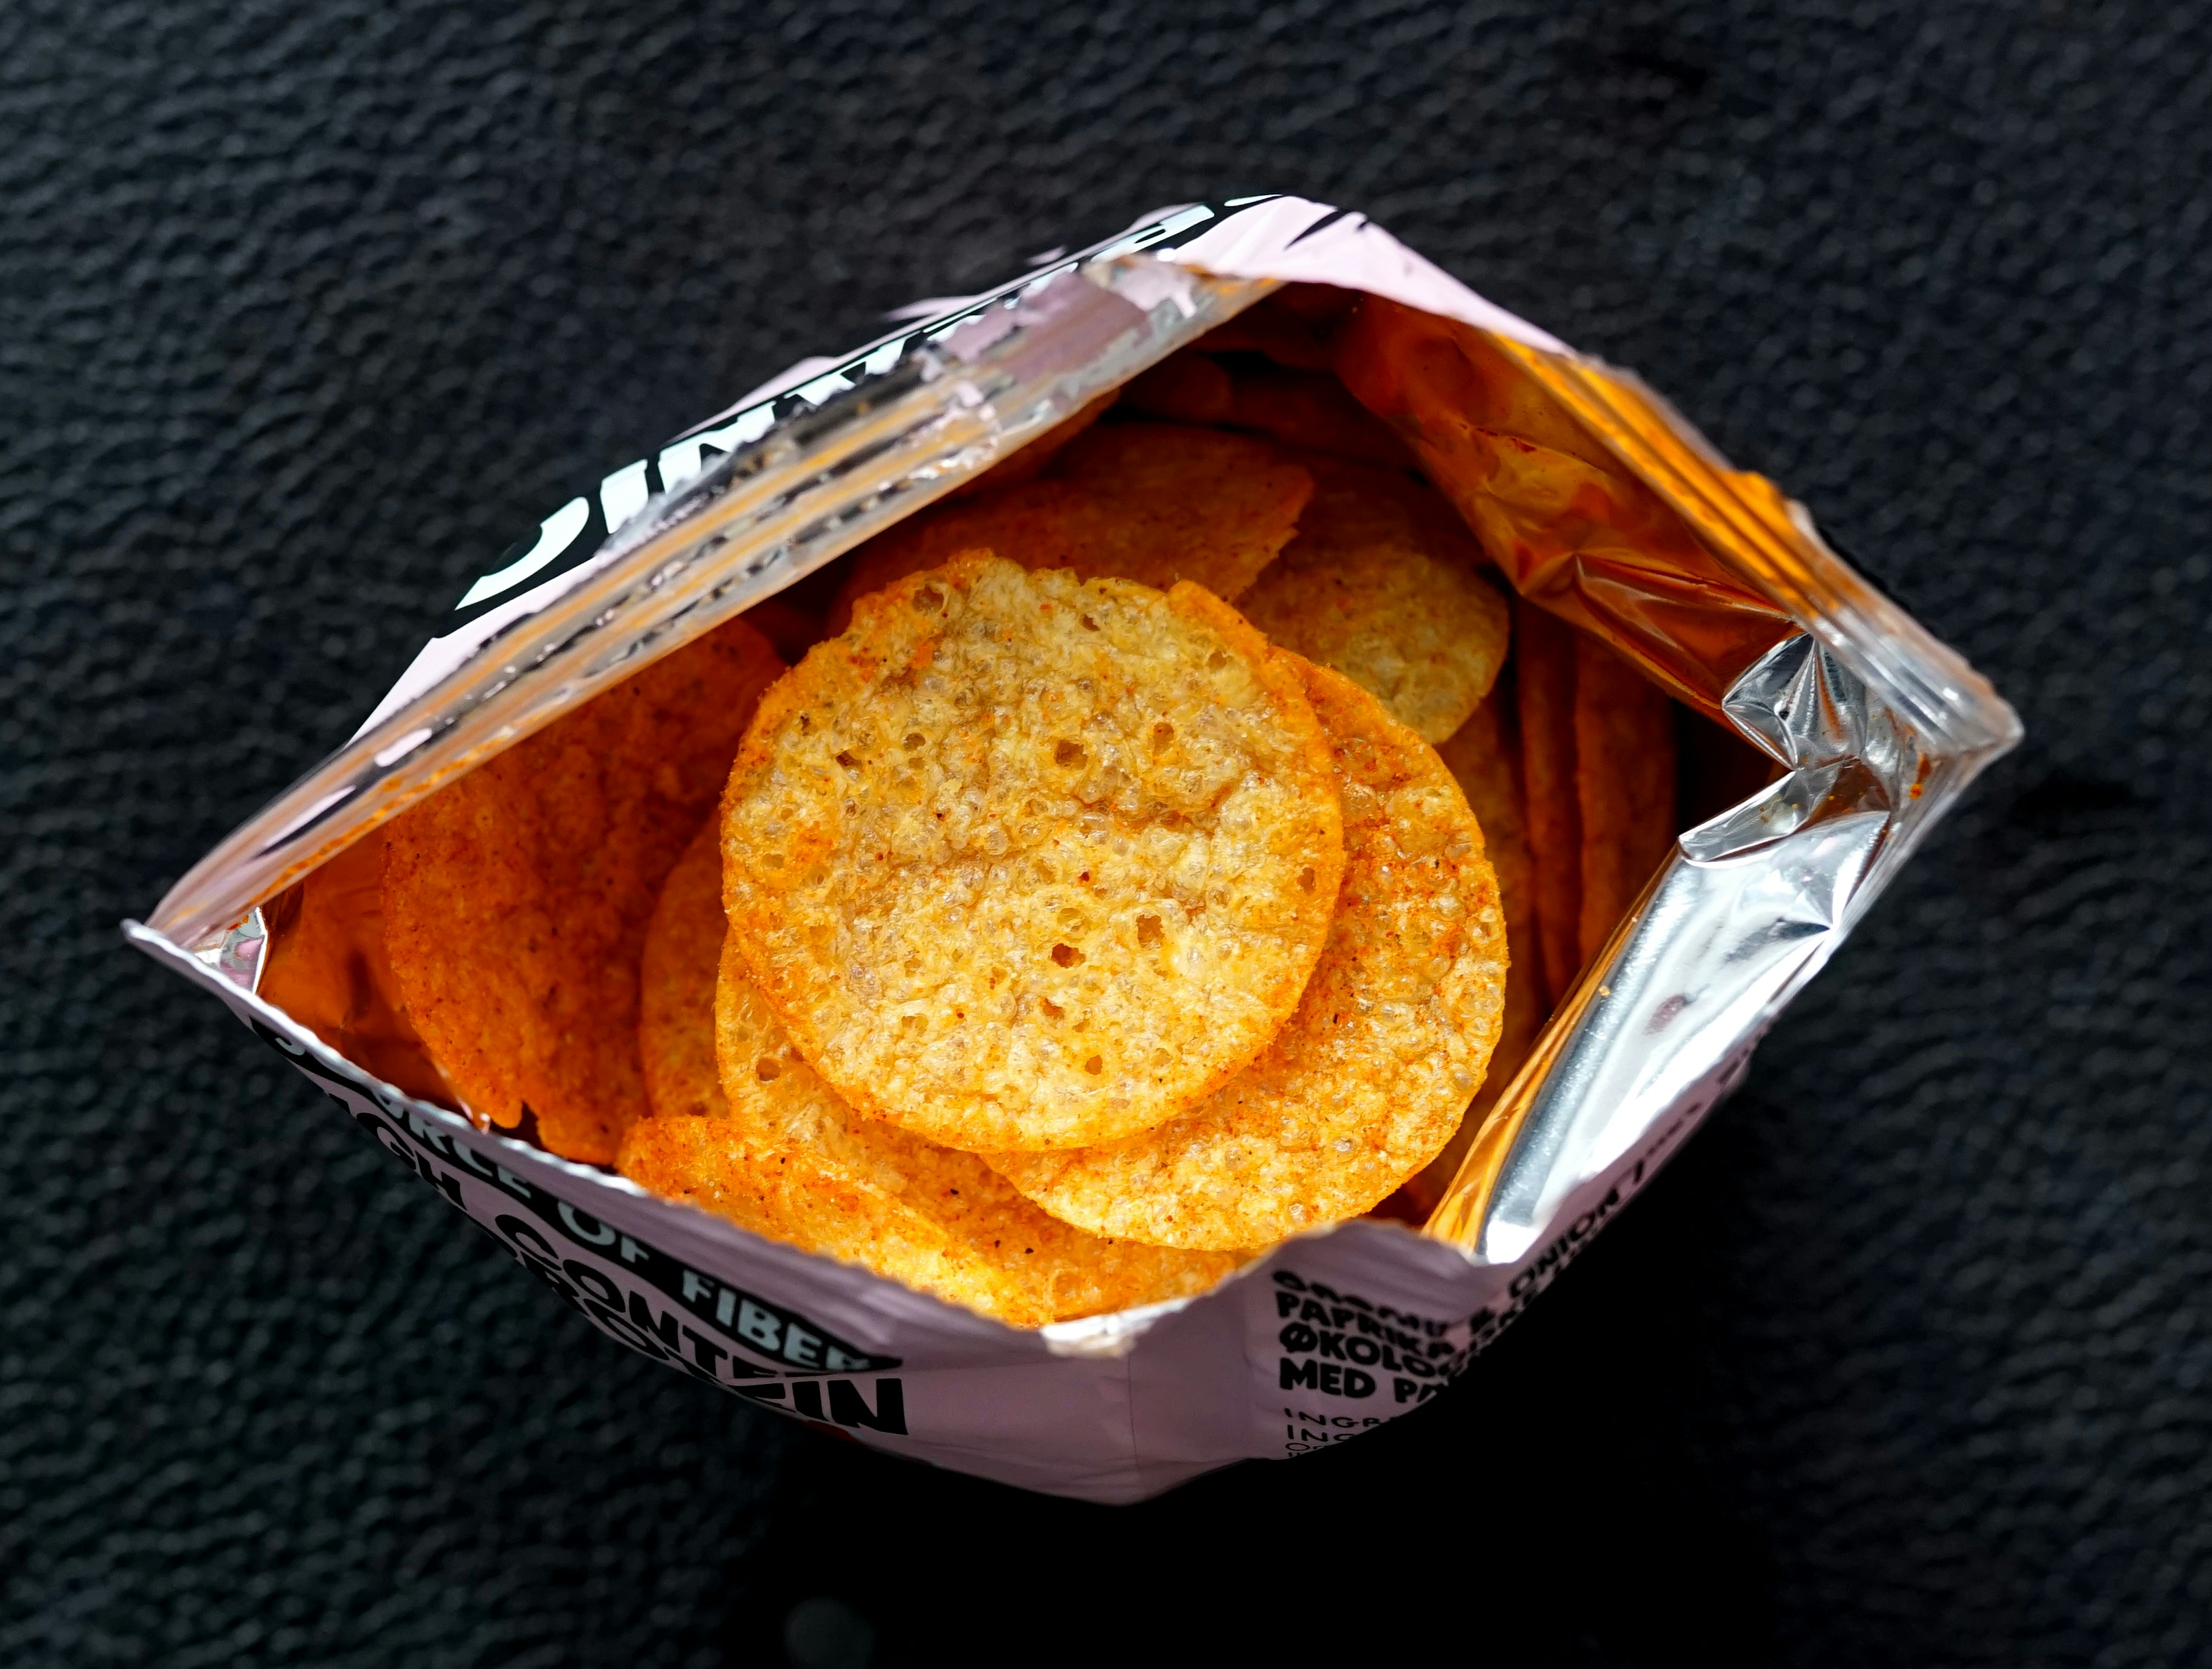 Un Chips. | Photo : Unsplash